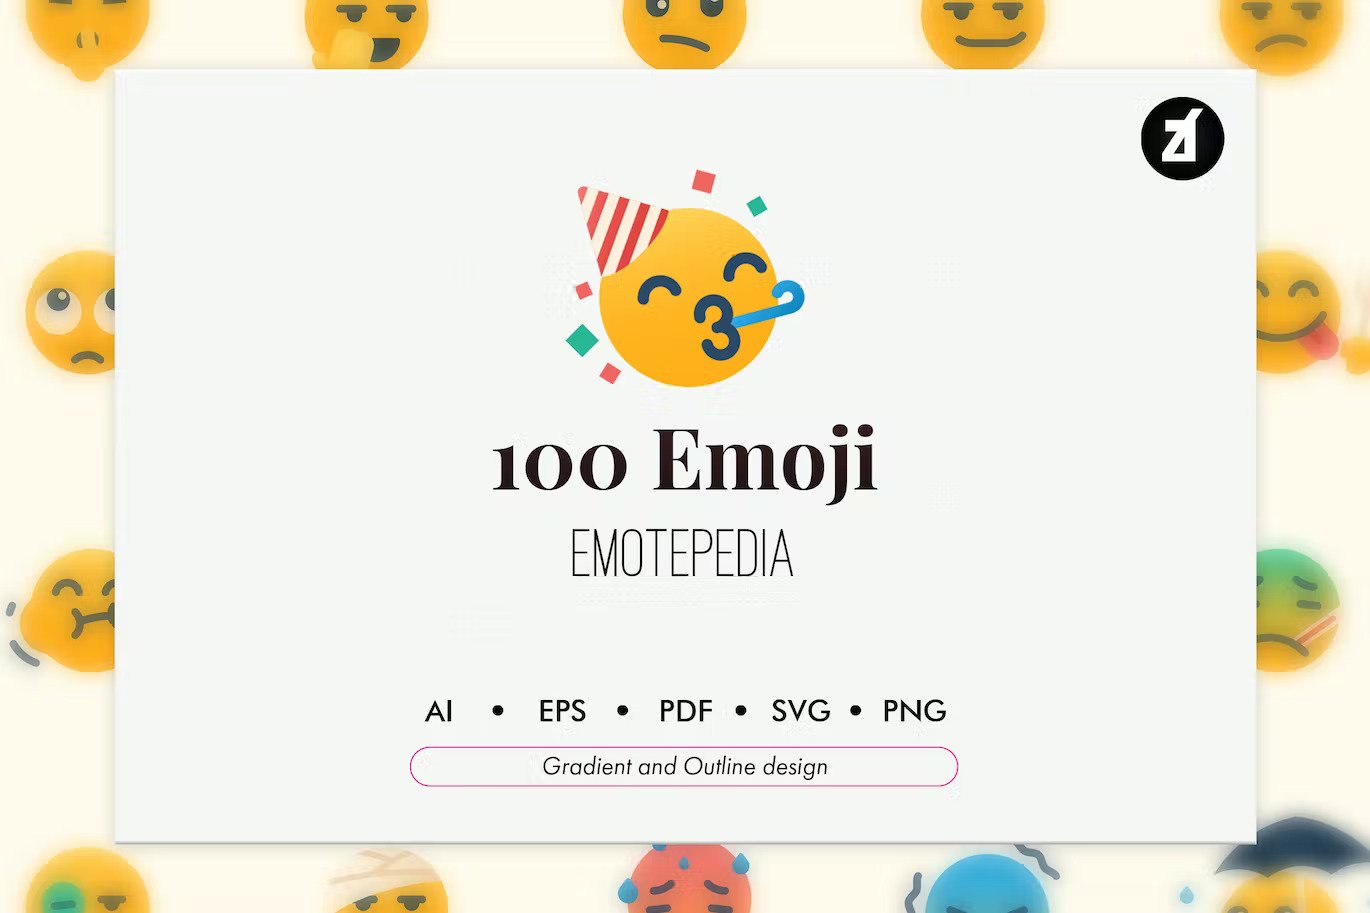 A set of emoji icons